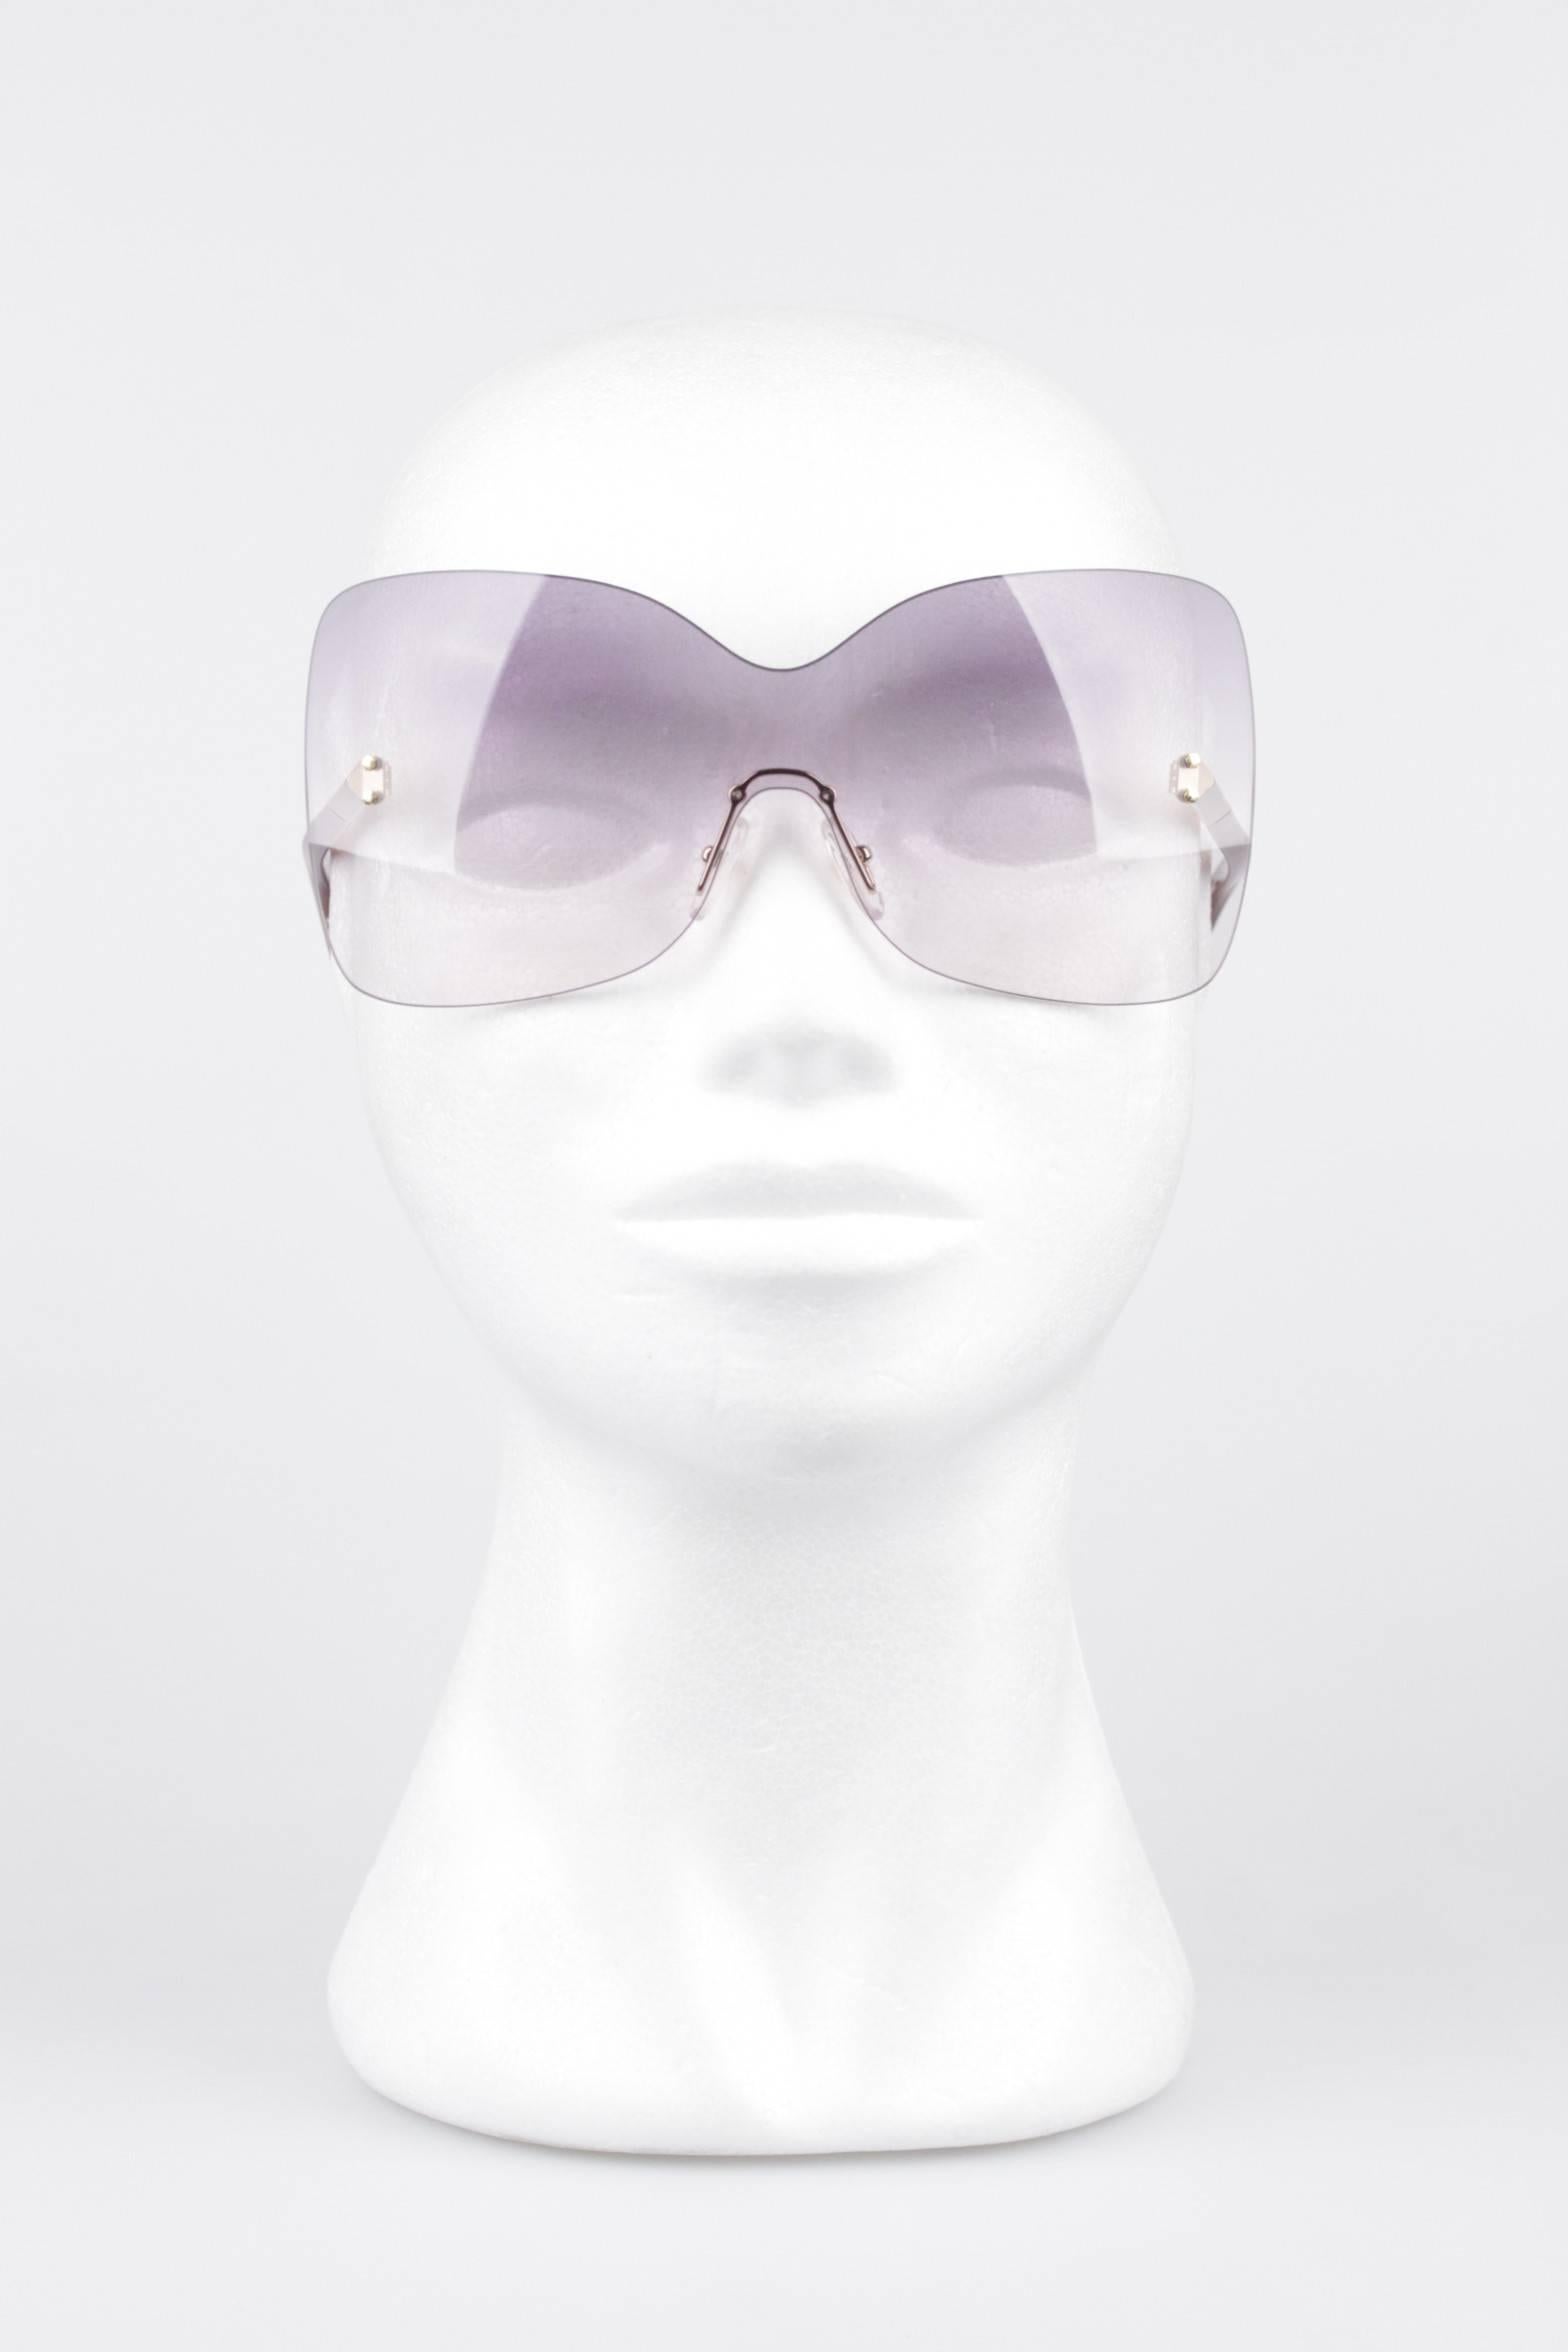 FENDI Rimless Sunglasses FS5273 513 Purple/Havana 65 mm New Old Stock 2